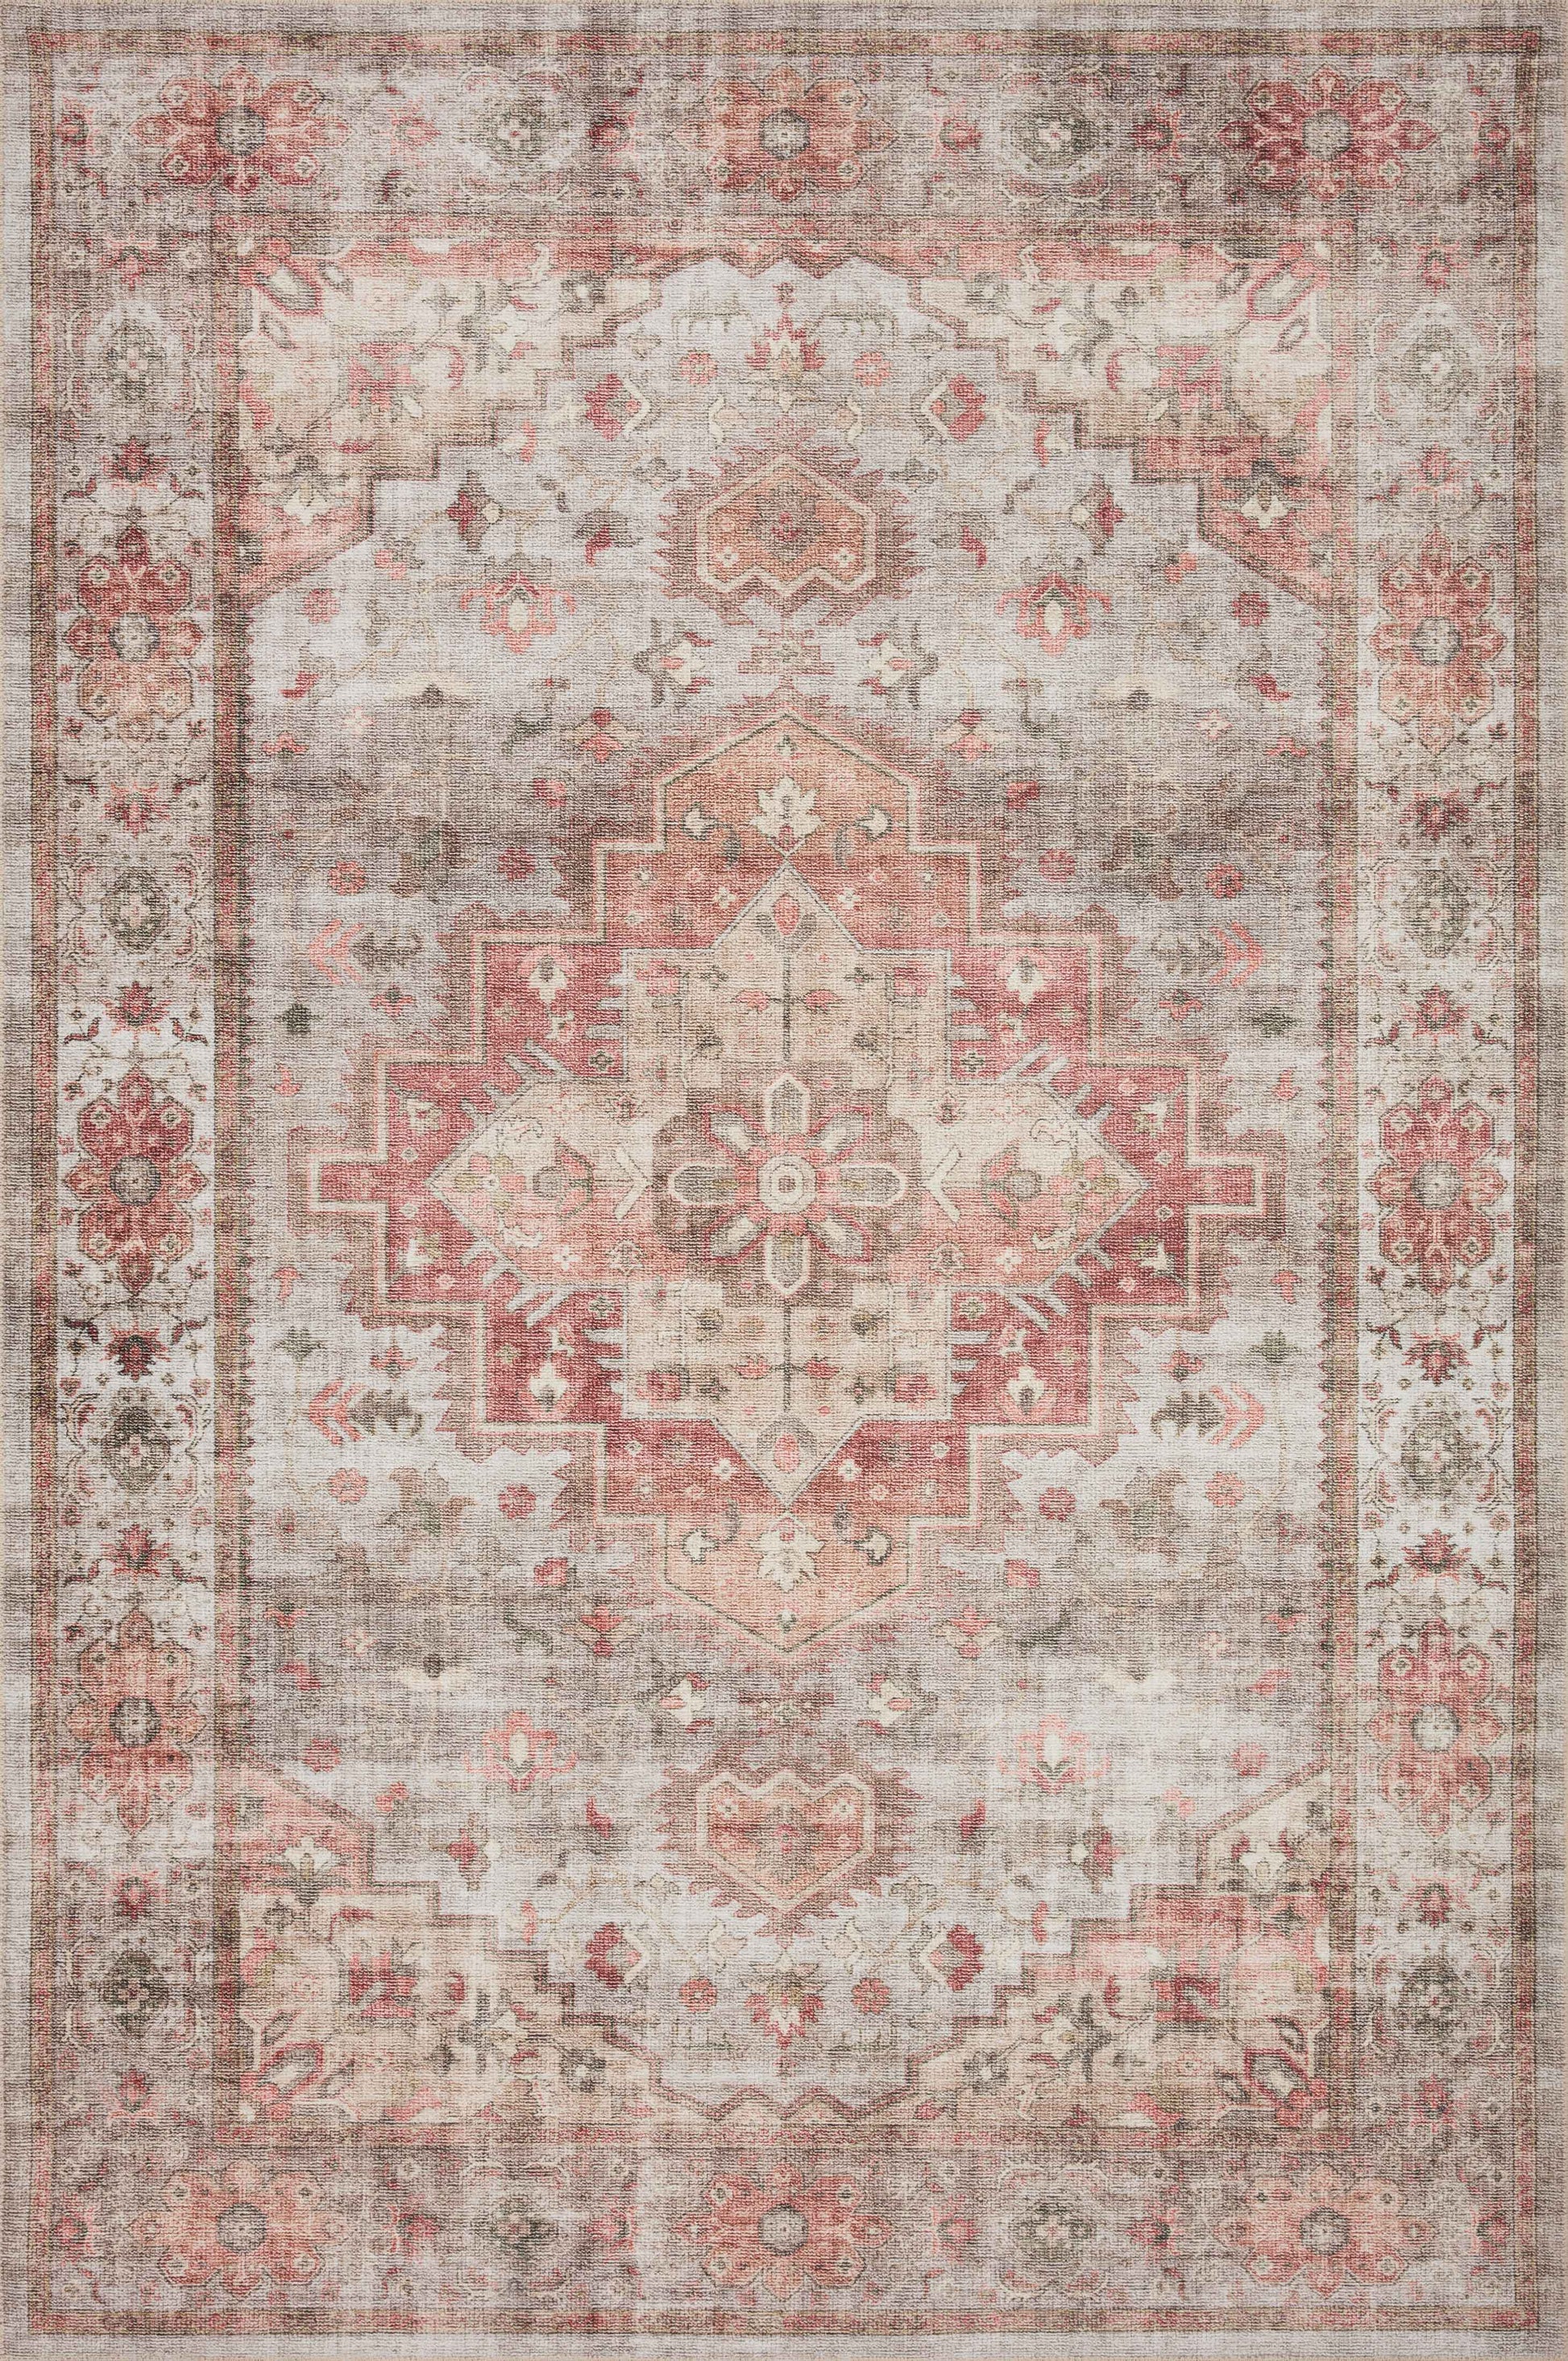 A picture of Loloi's Heidi rug, in style HEI-02, color Dove / Spice